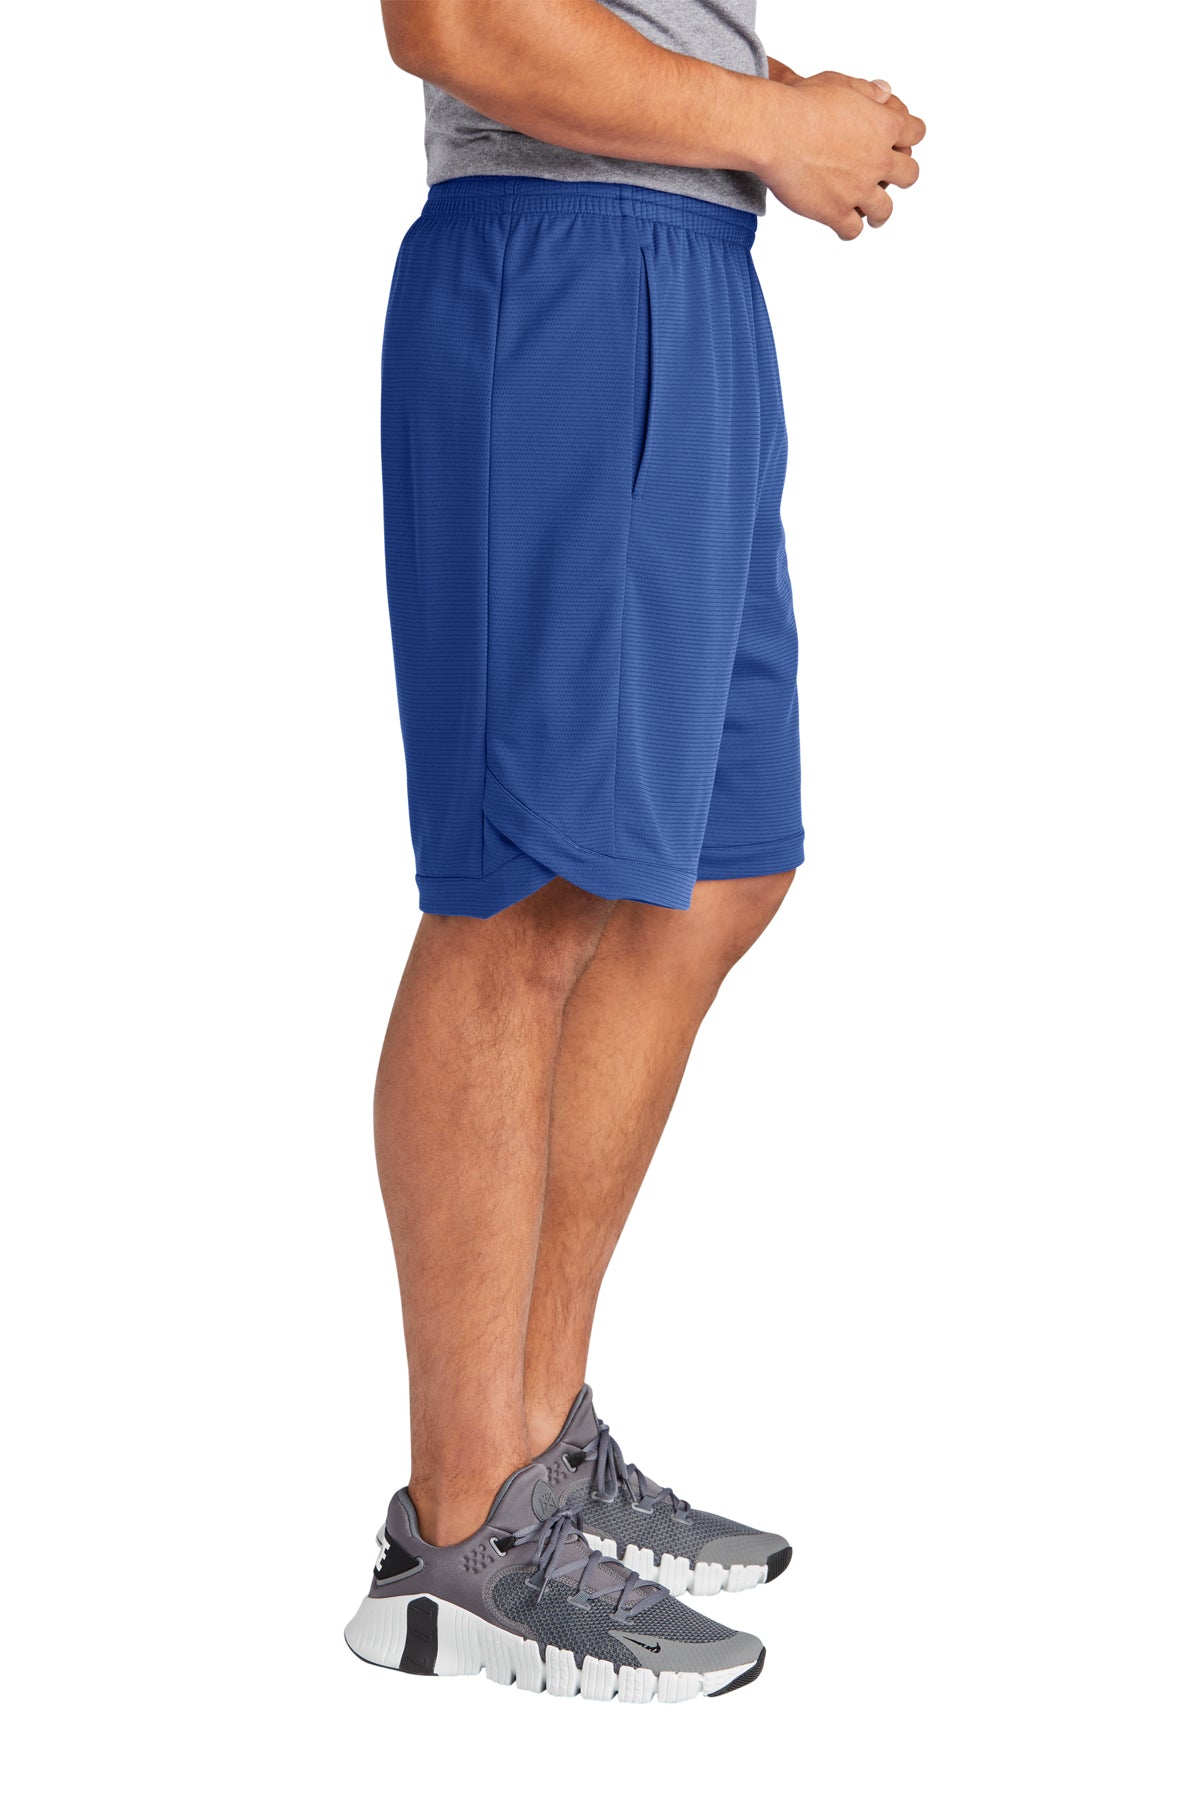 Sport-Tek Custom PosiCharge Position Shorts with Pockets, True Royal